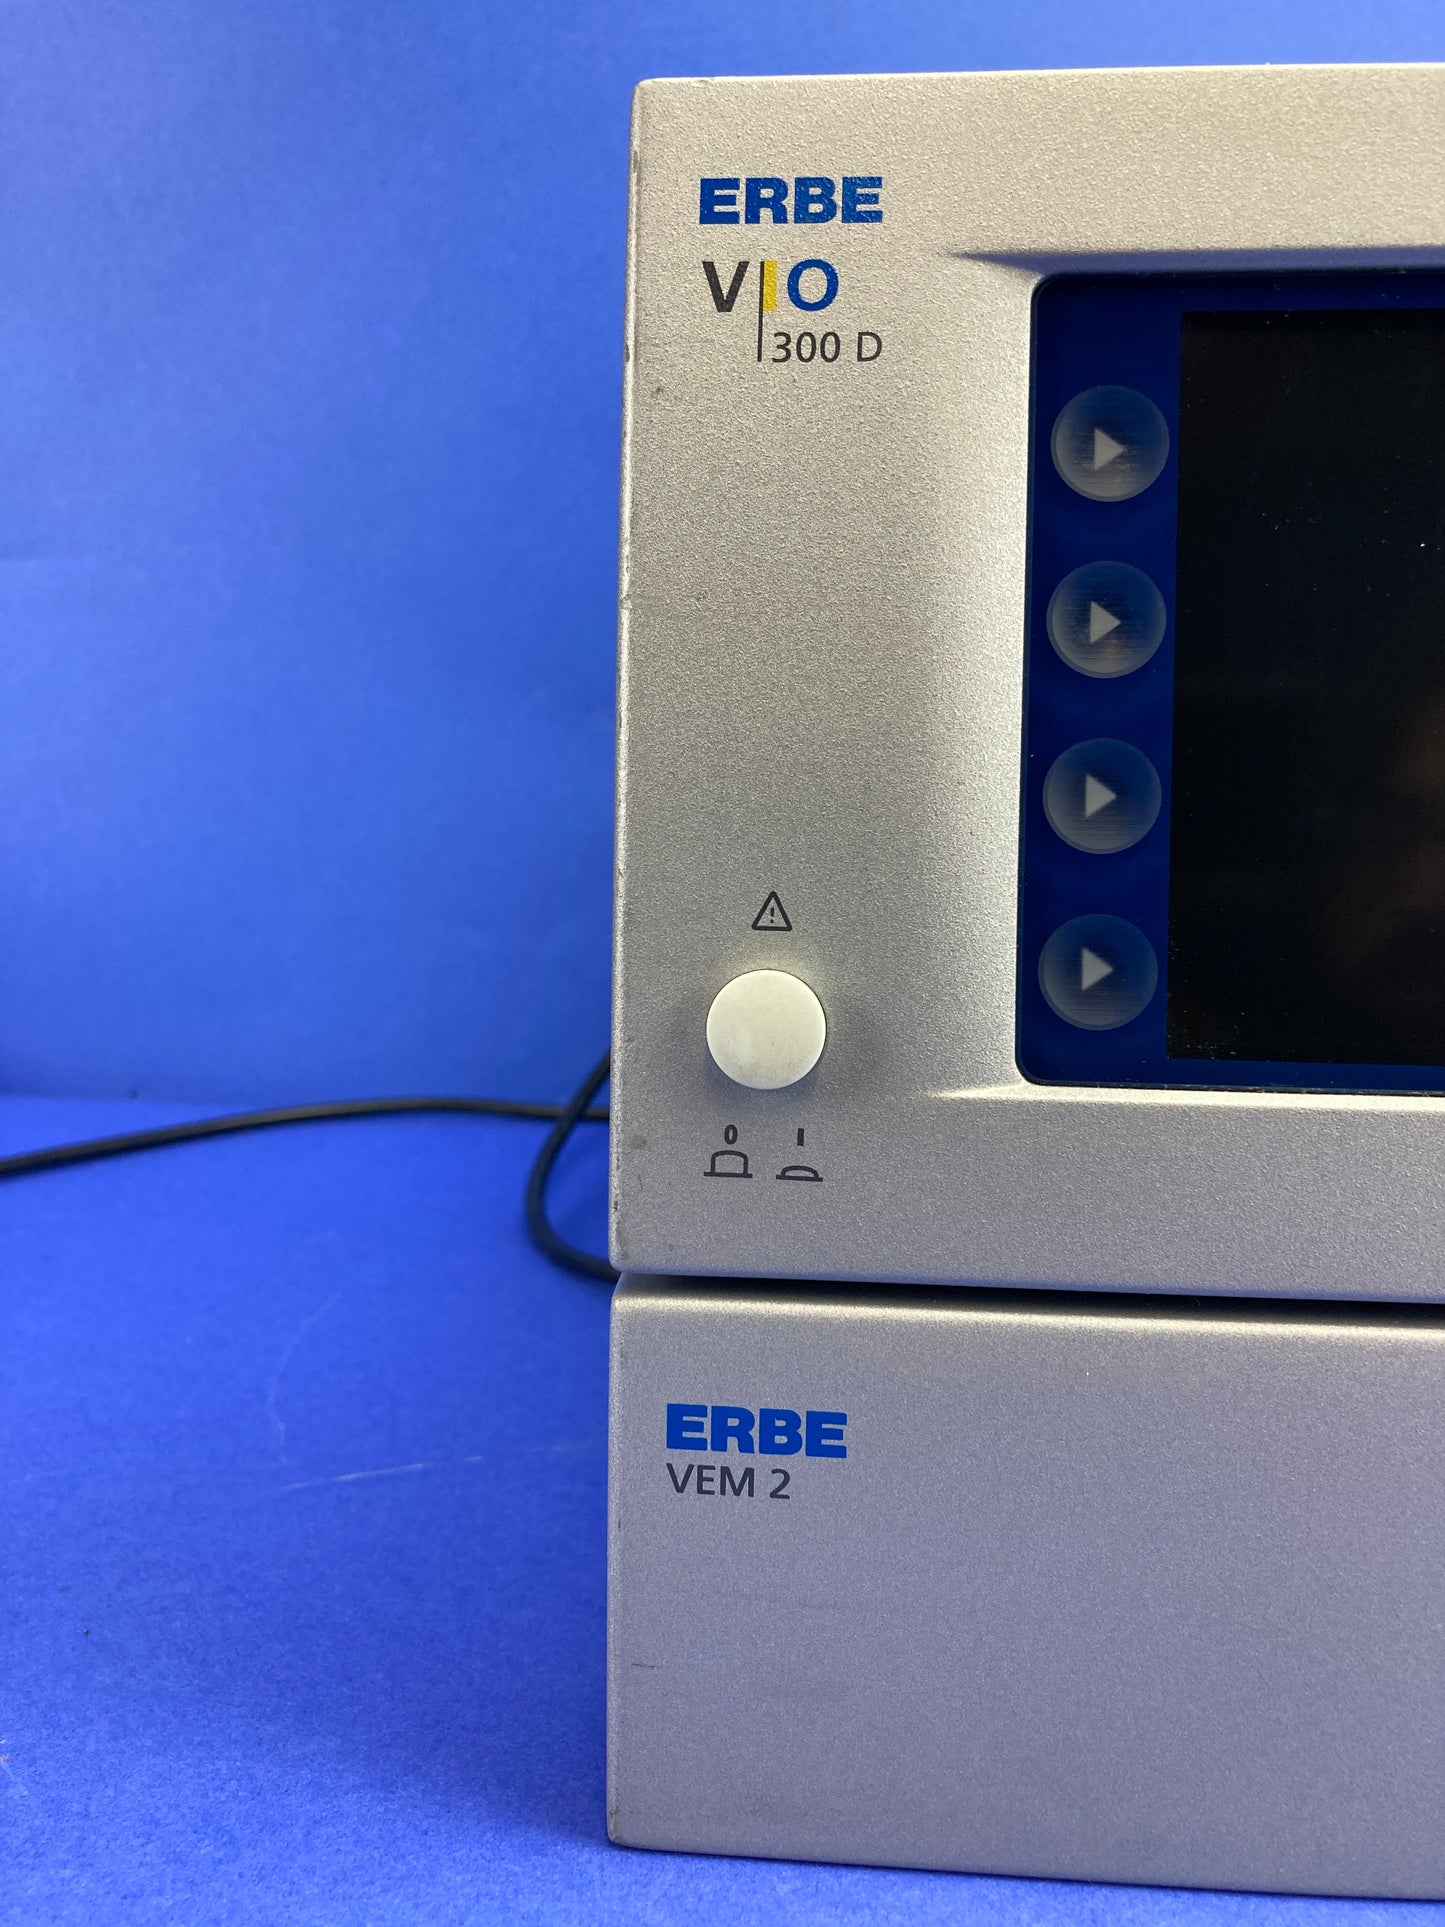 Erbe VIO 300D Electrosurgical Unit with Erbe APC2 Argon Plasma Coagulator